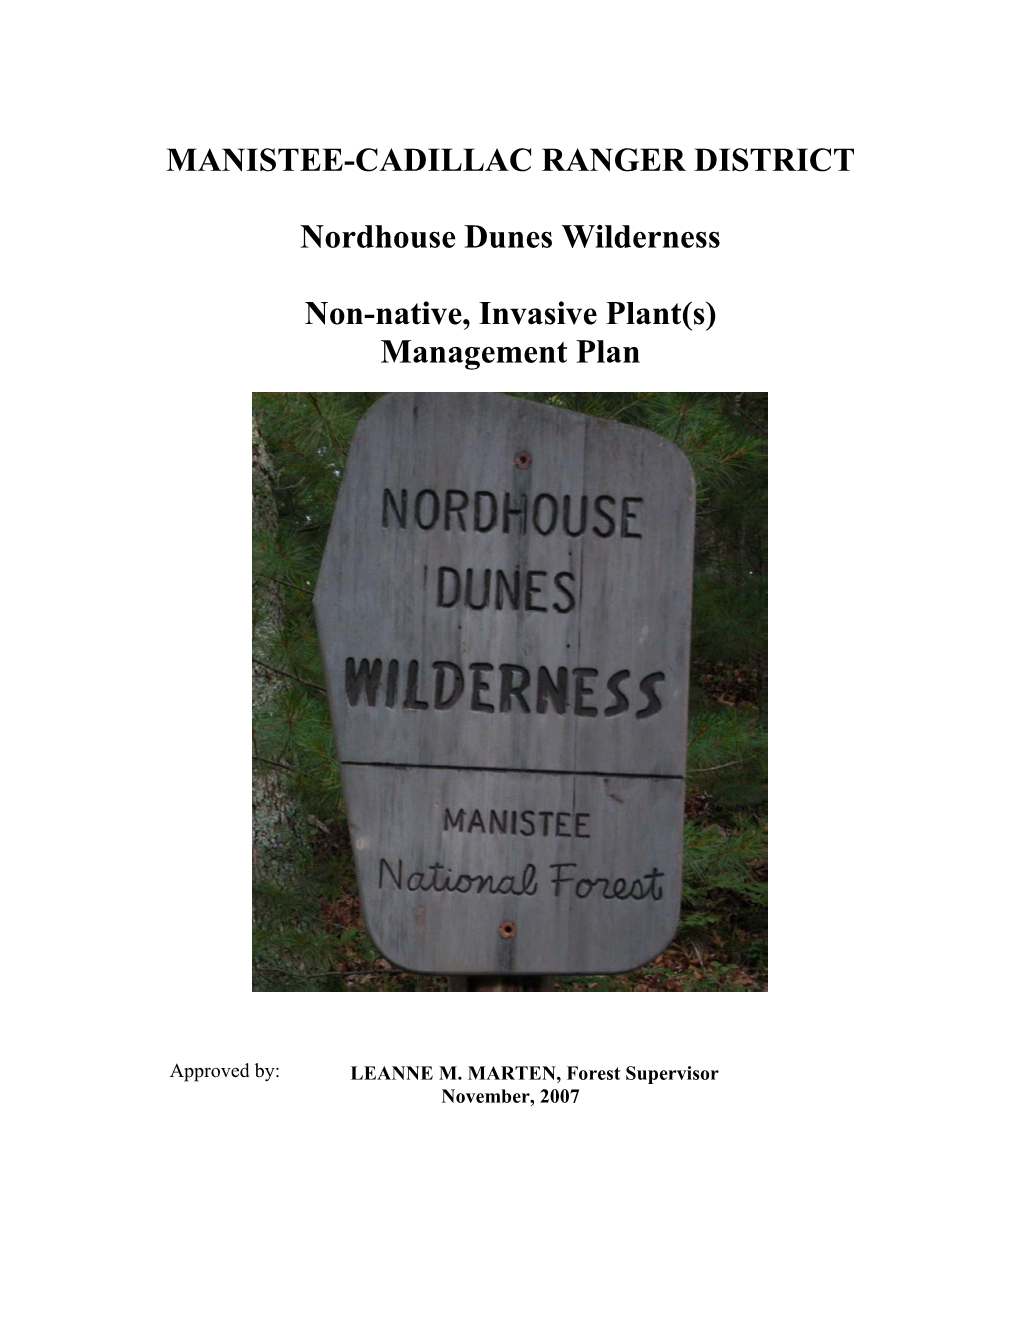 Nordhouse Dunes Wilderness Invasive Species Management Plan